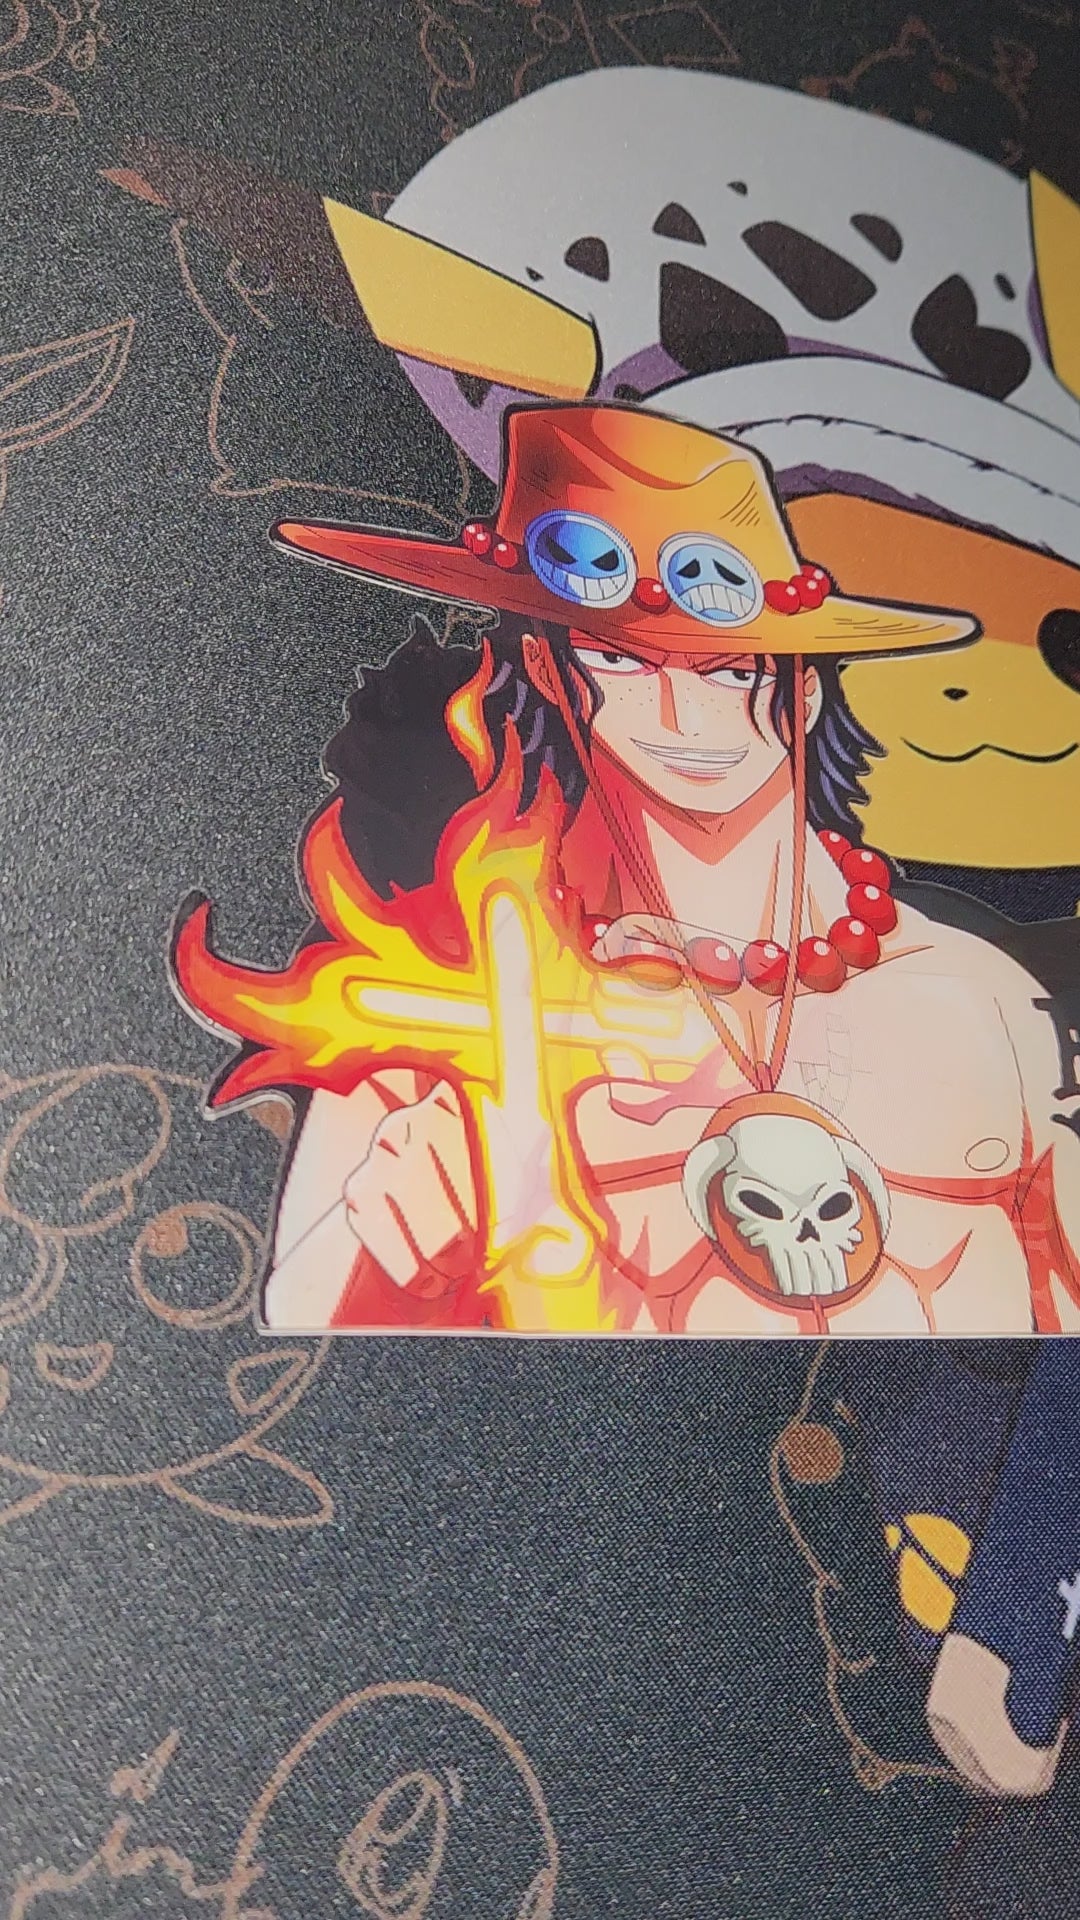 One Piece Anime Motion Sticker - Luffy Gear